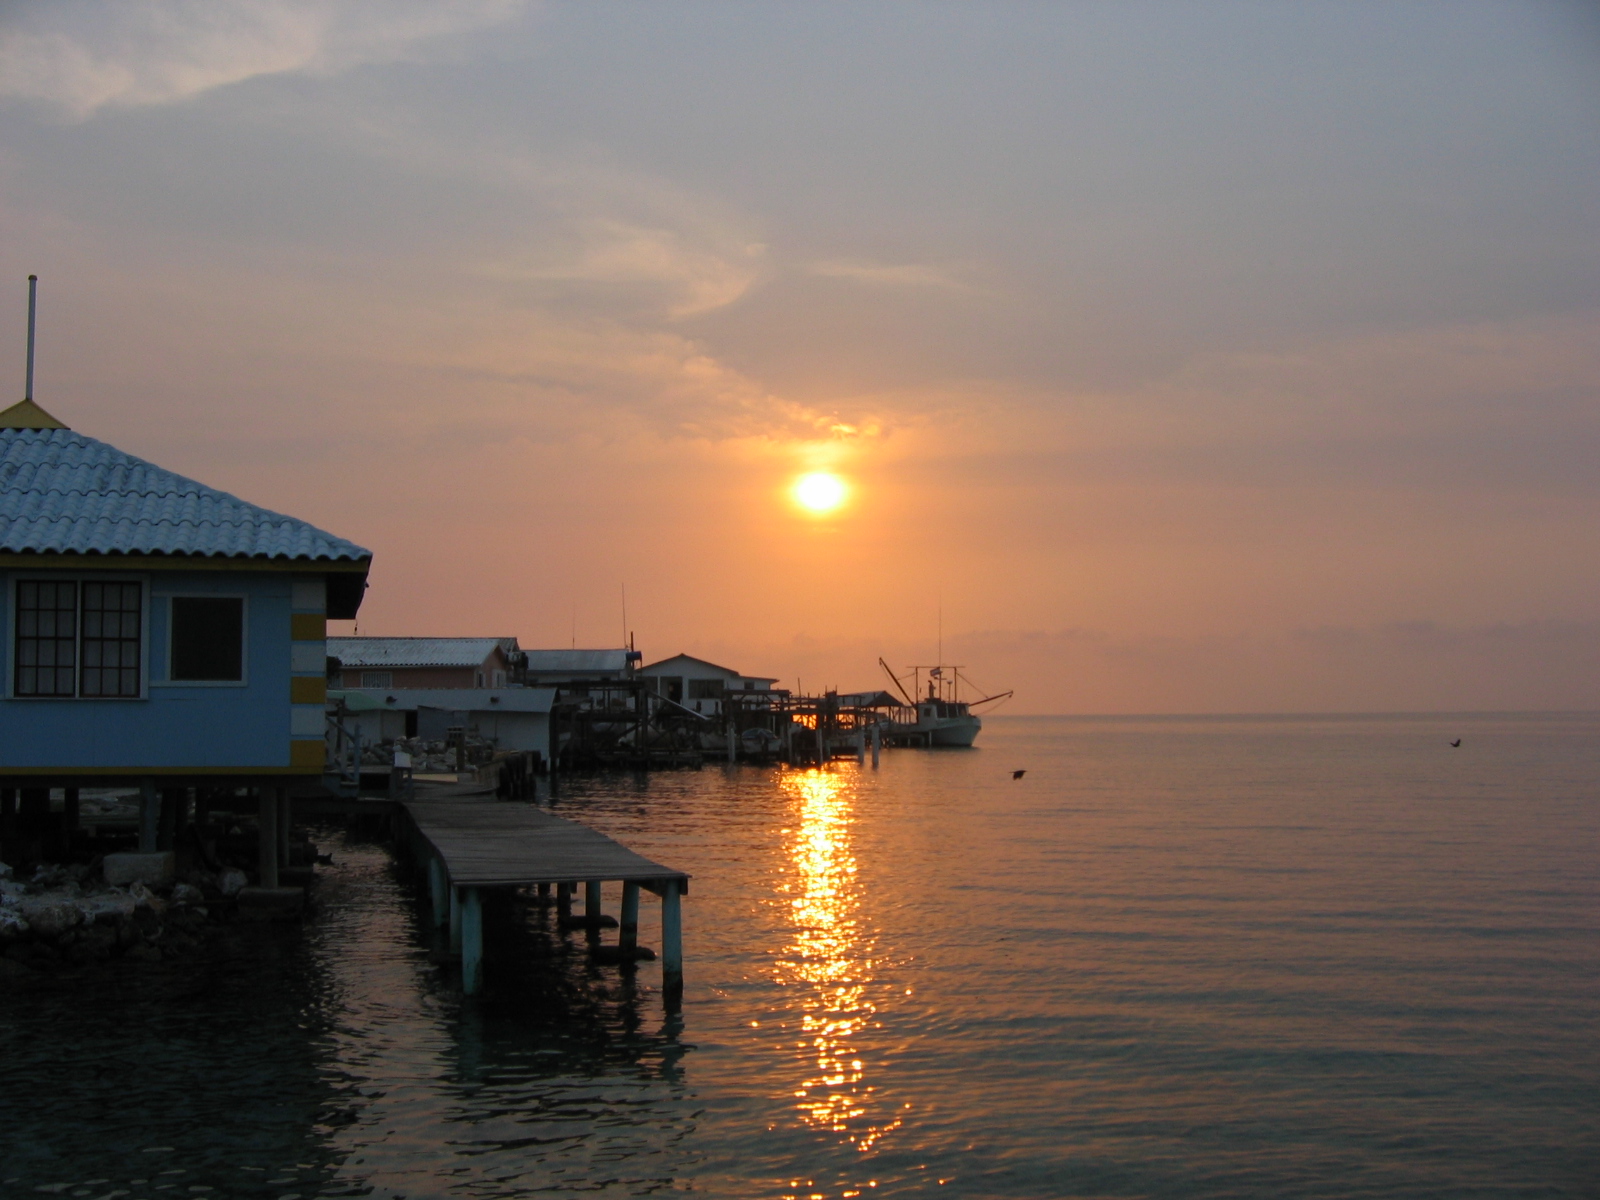 Sunset, Jewel Caye